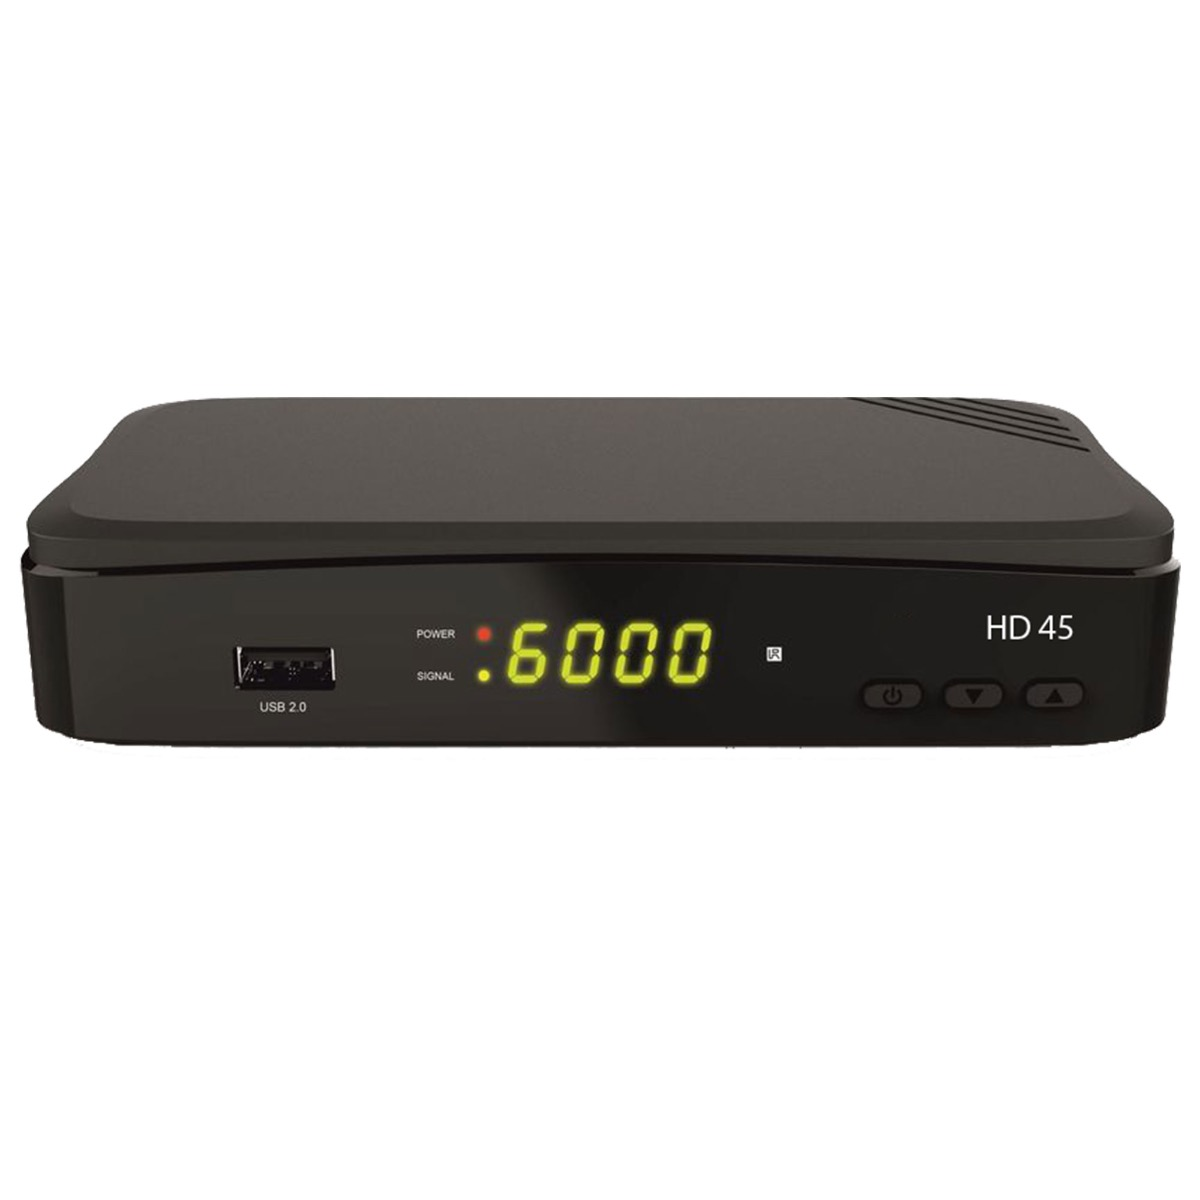 COMAG HD45 Satellitenreceiver (HDTV, DVB-S, schwarz) DVB-S2